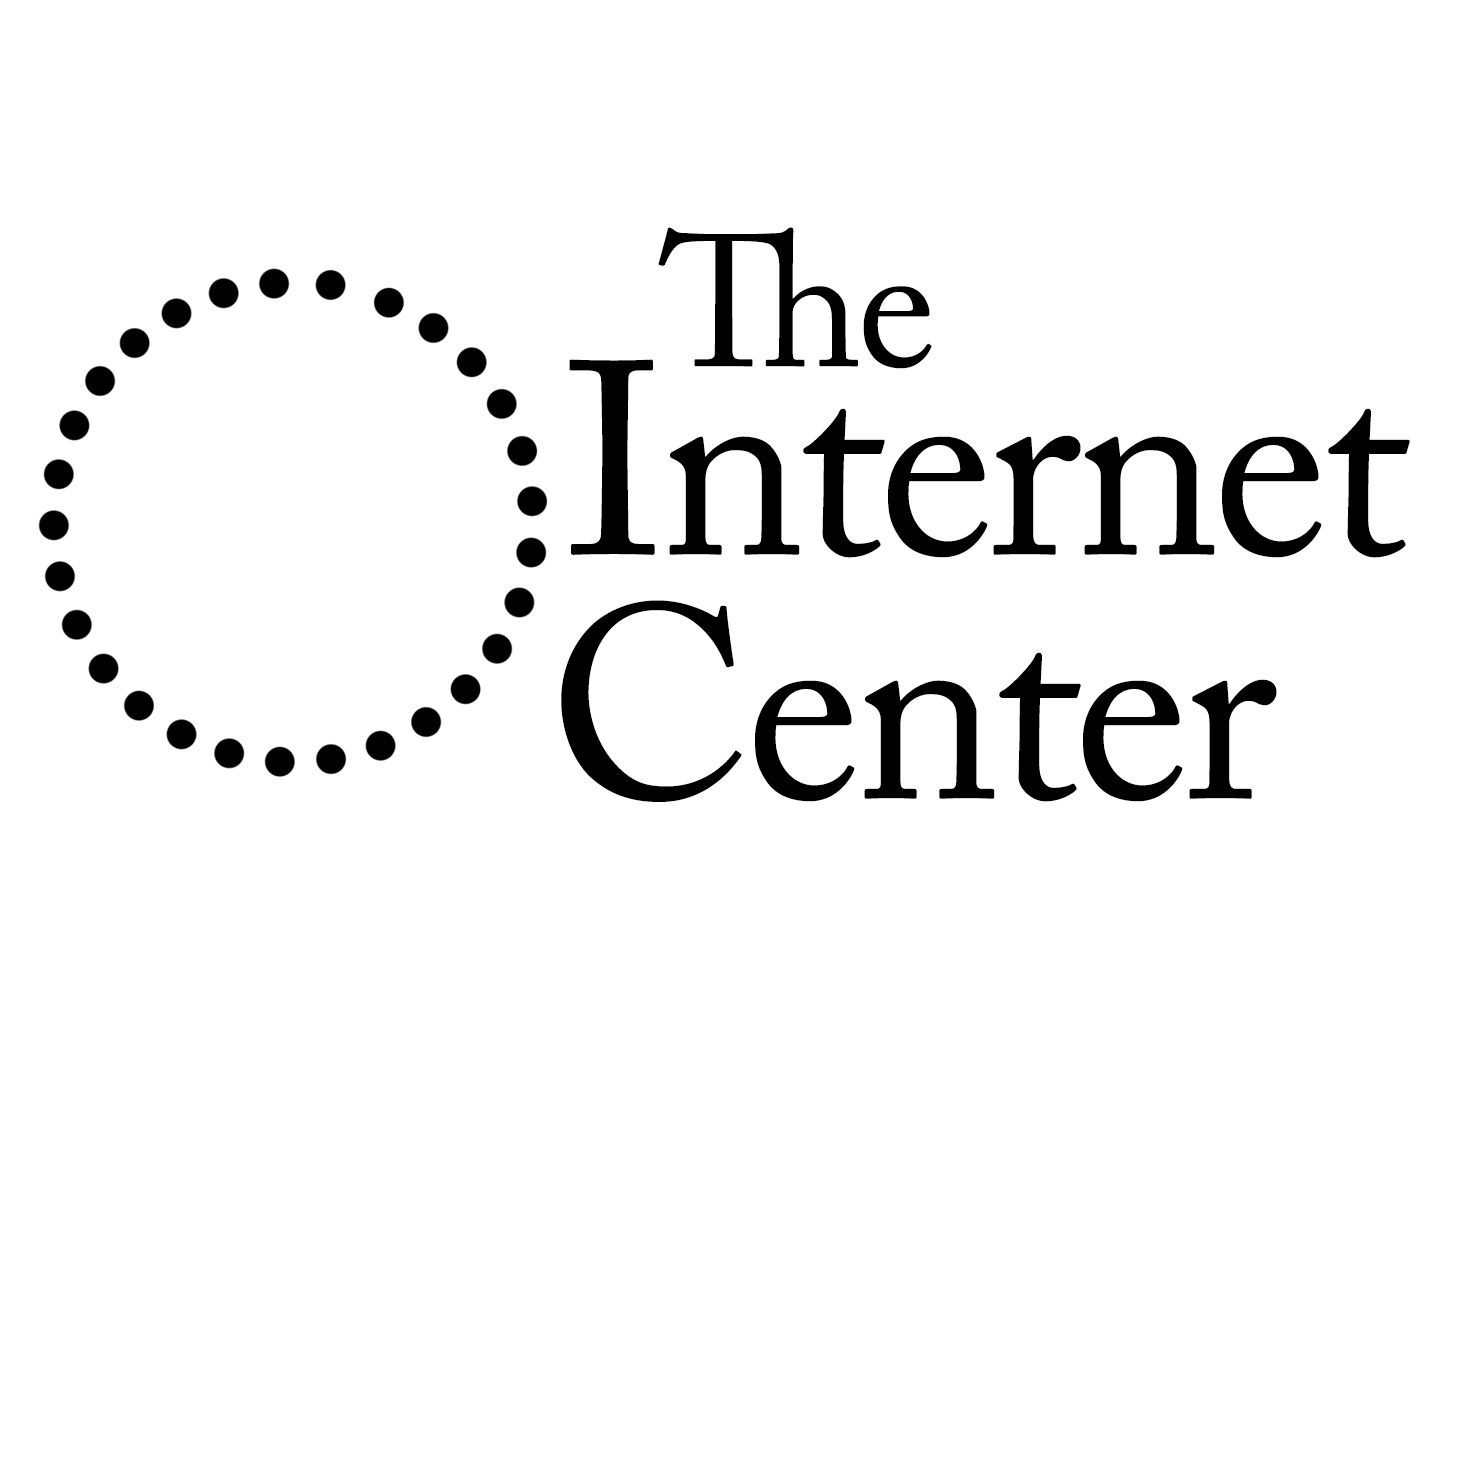 The Internet Center